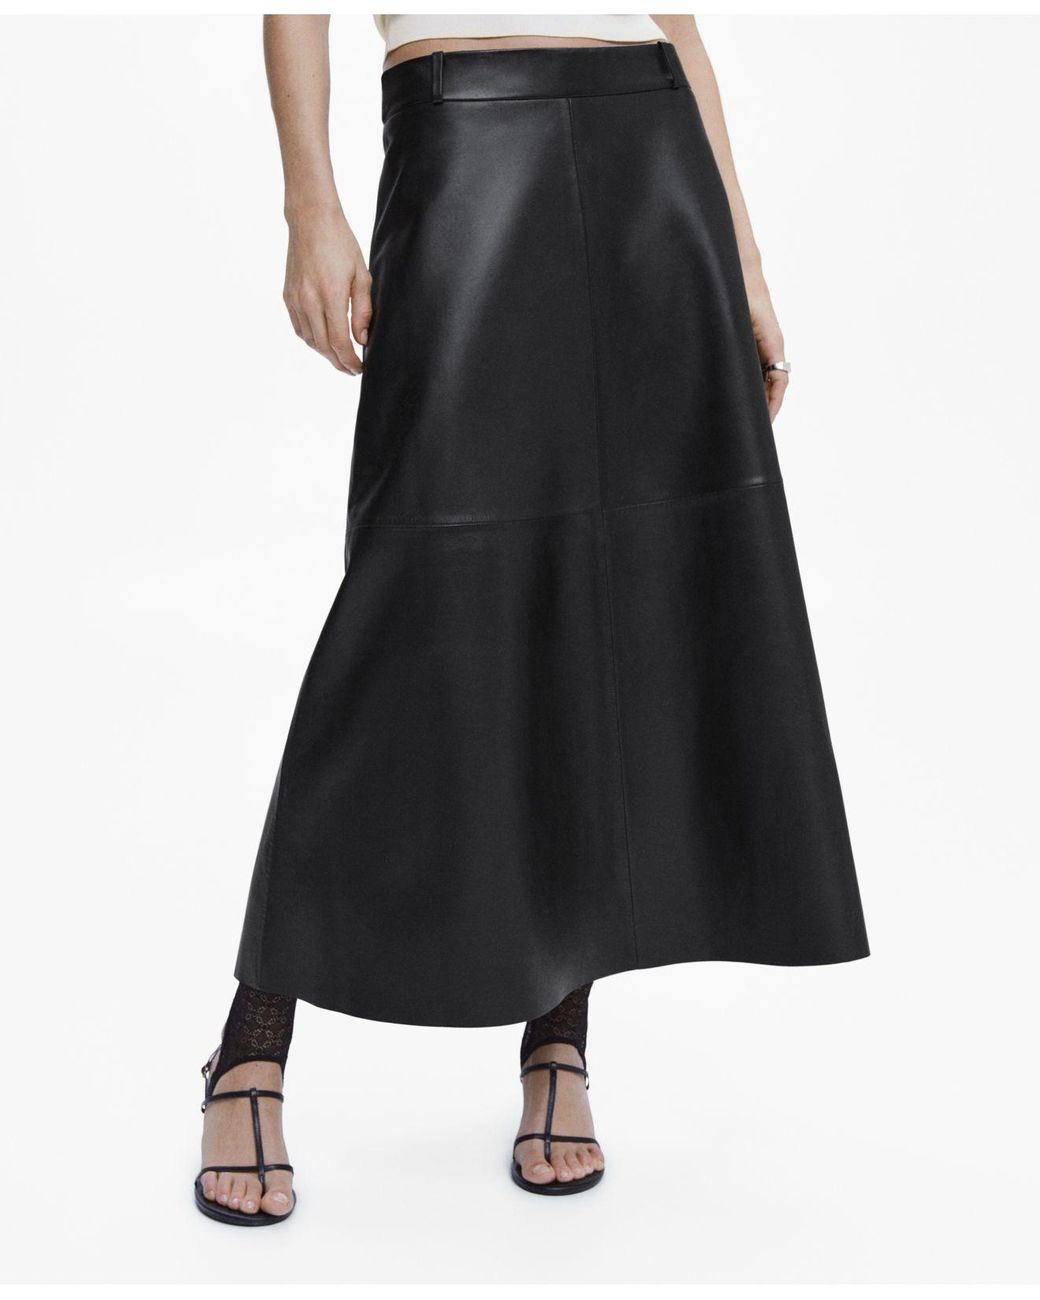 Mango Leather Midi Skirt in Black | Lyst